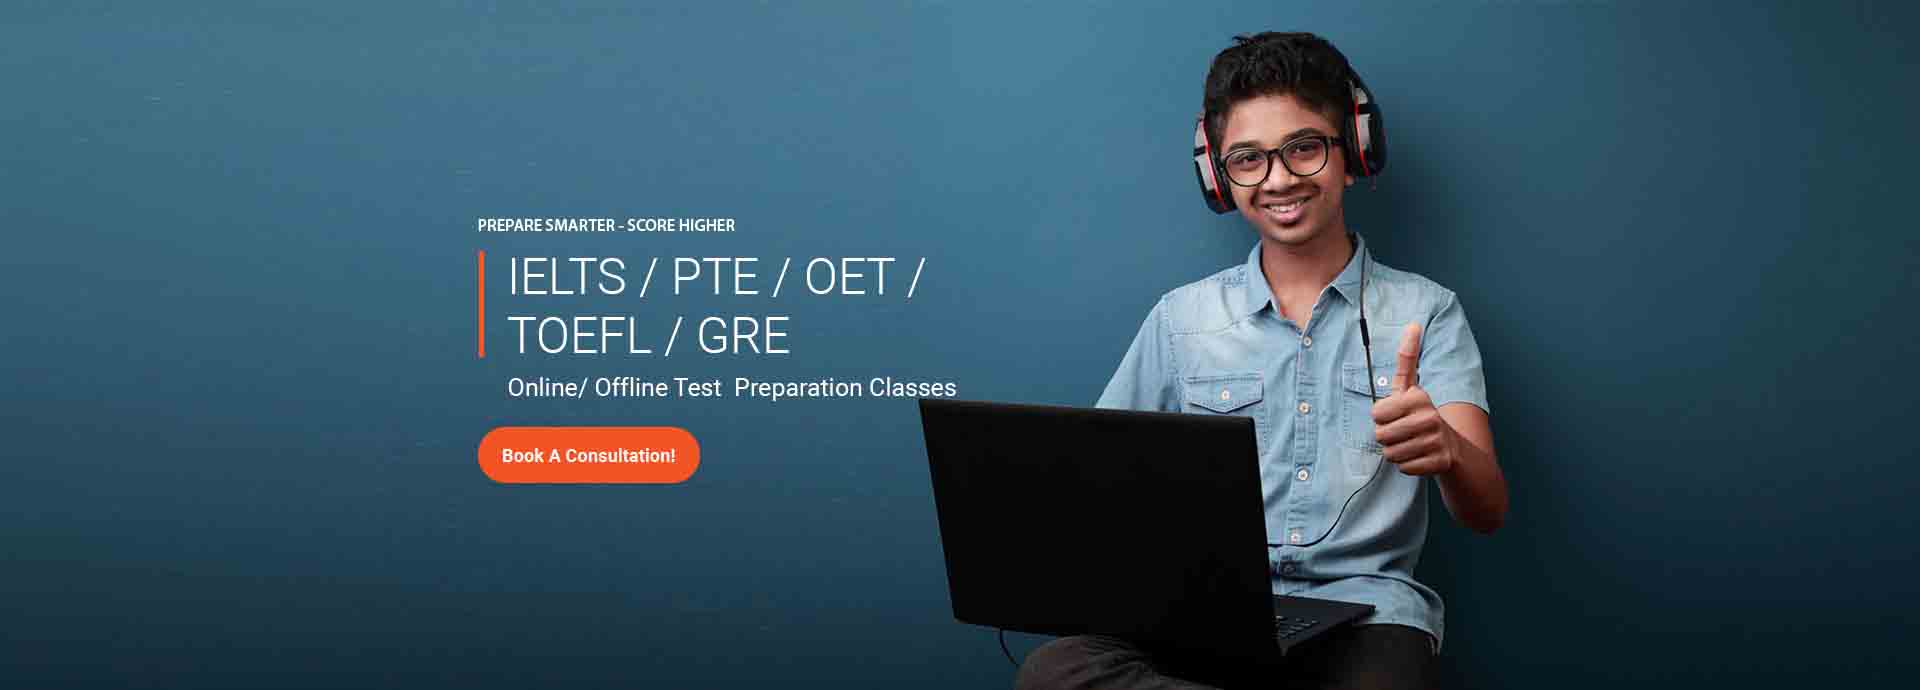 Start preparing for IELTS / PTE / OET / TOEFL / GRE